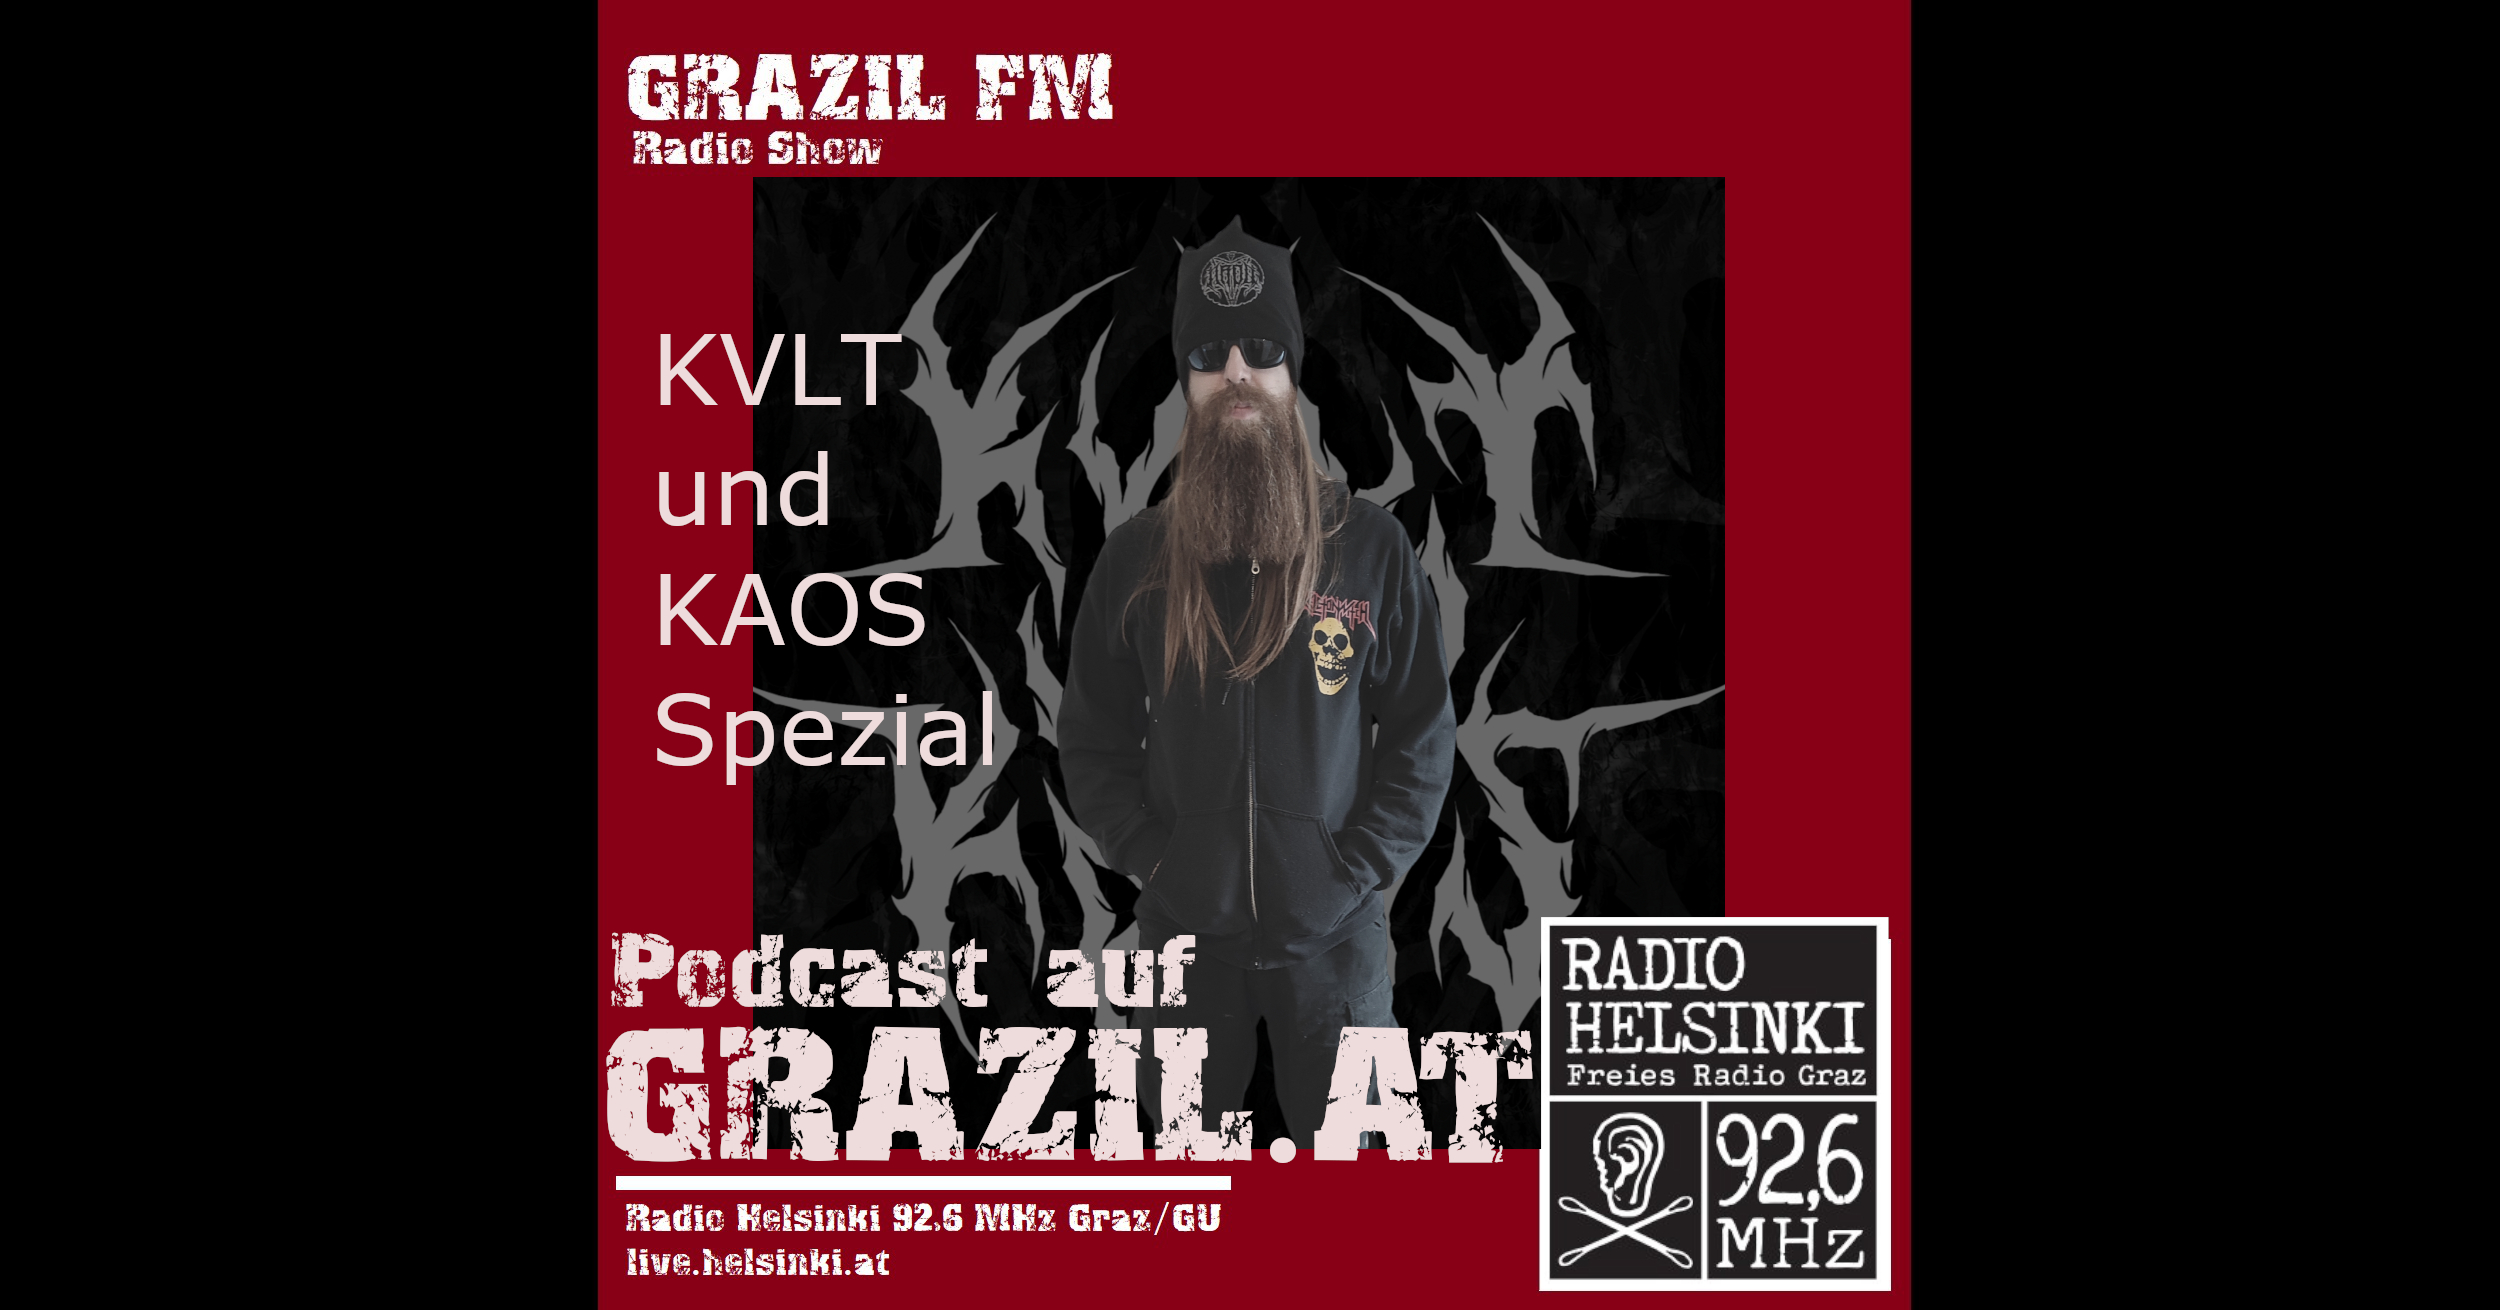 grazil FM Kvlt und Kaos Spezial